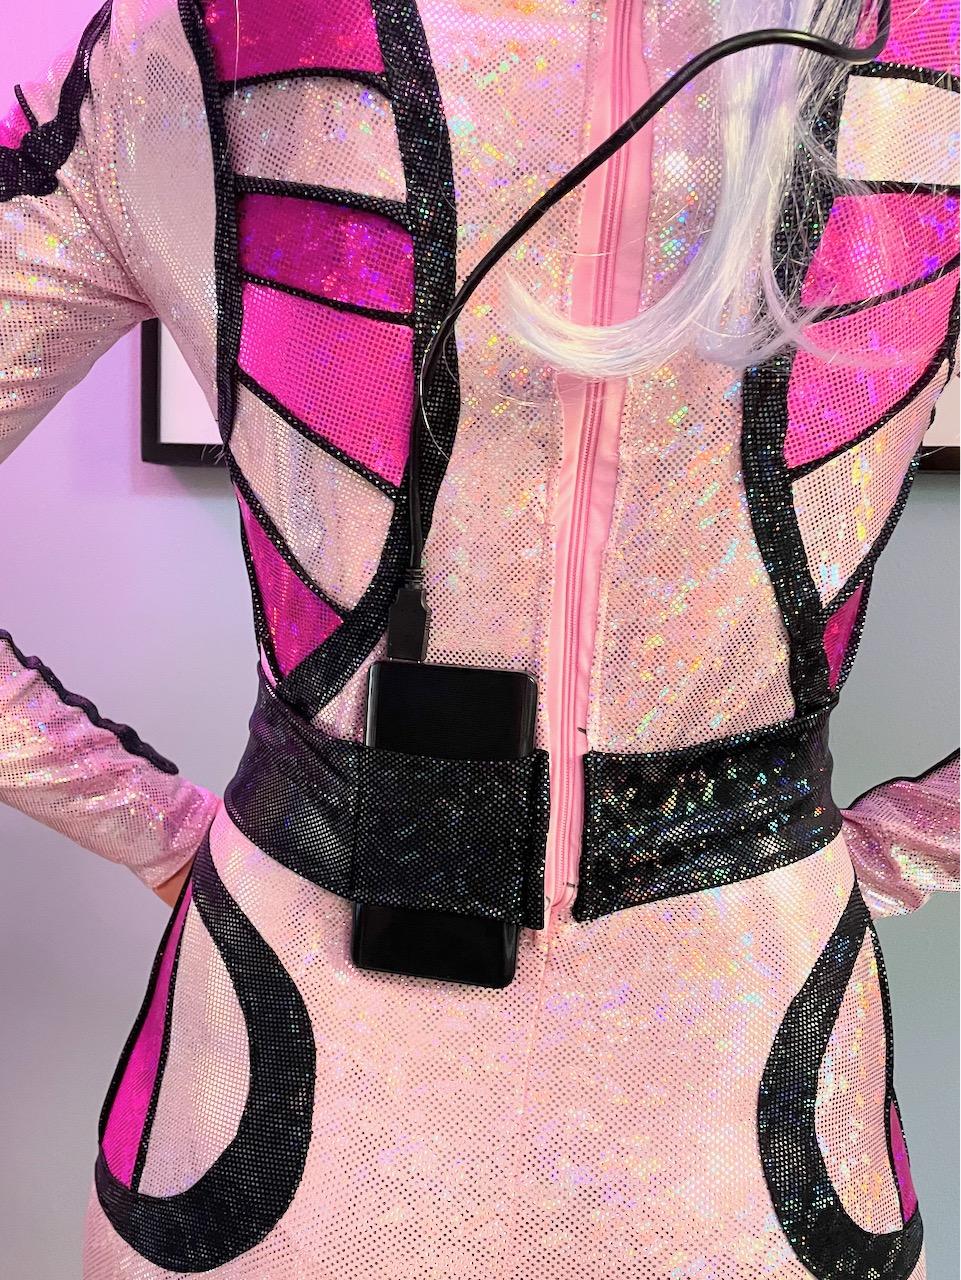 Lady Gaga Costume - 48 of 49.jpeg